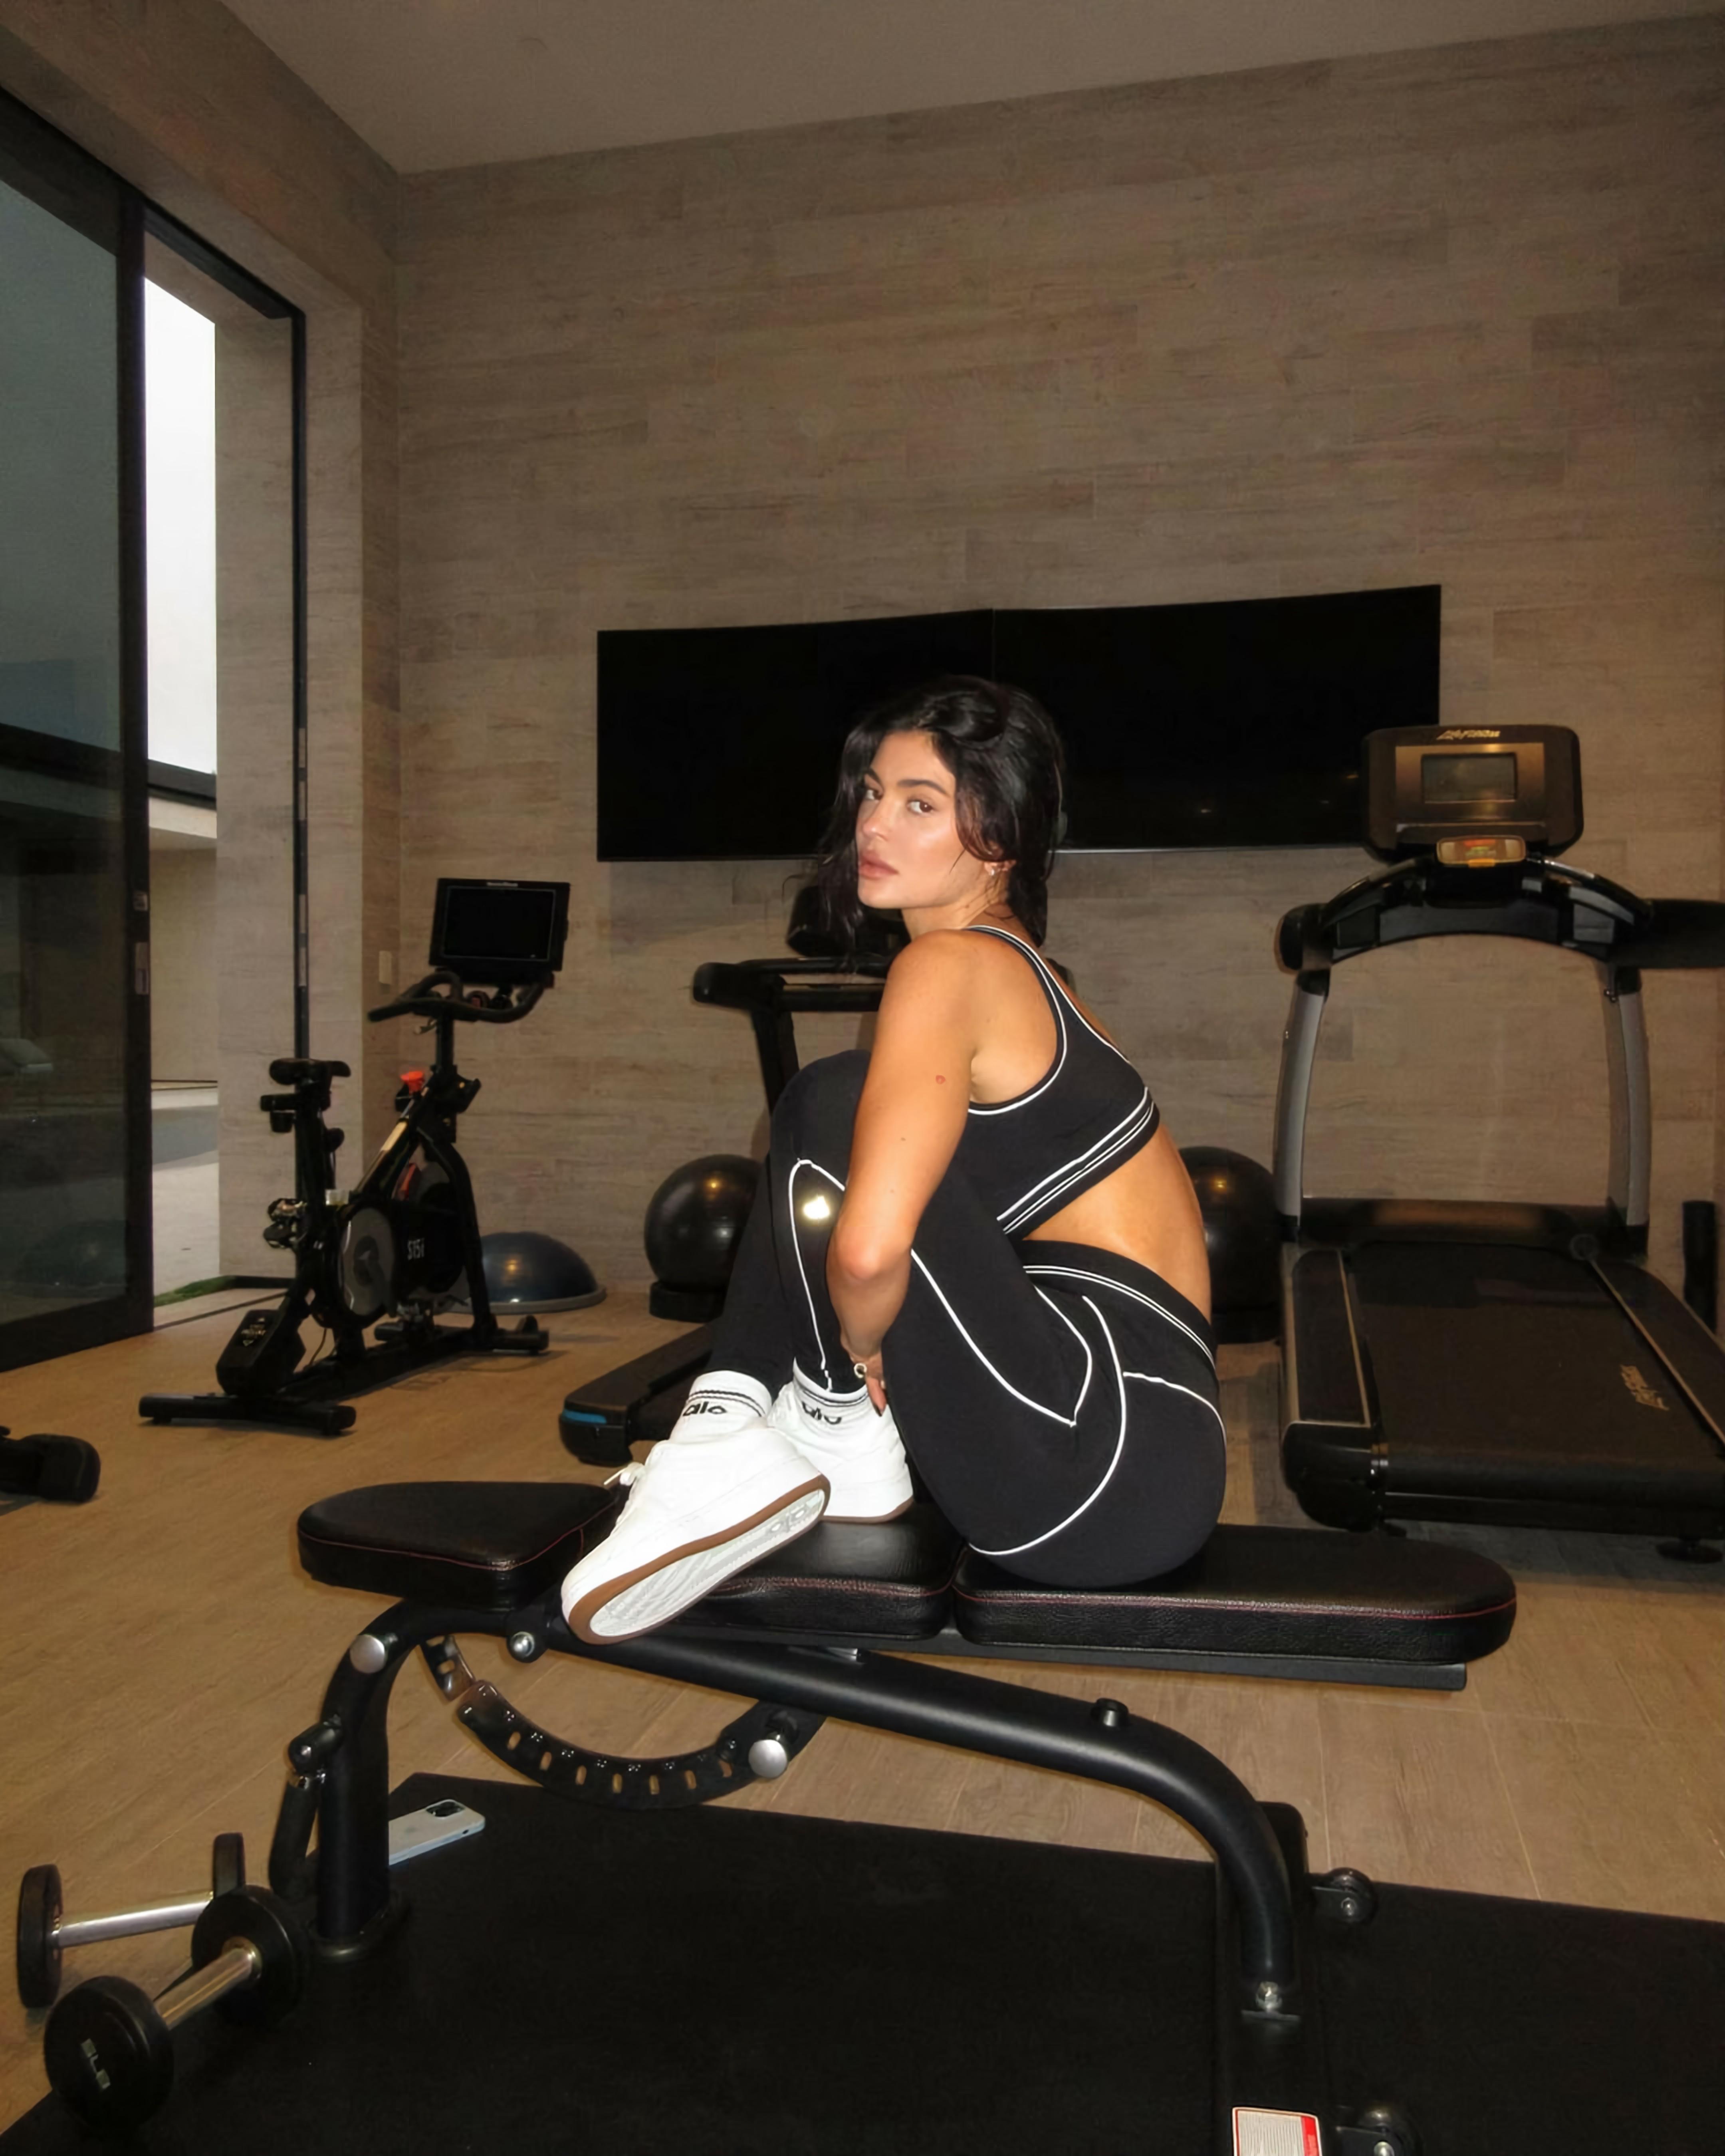 Photos n°1 : Kylie Jenner Hits the Gym!